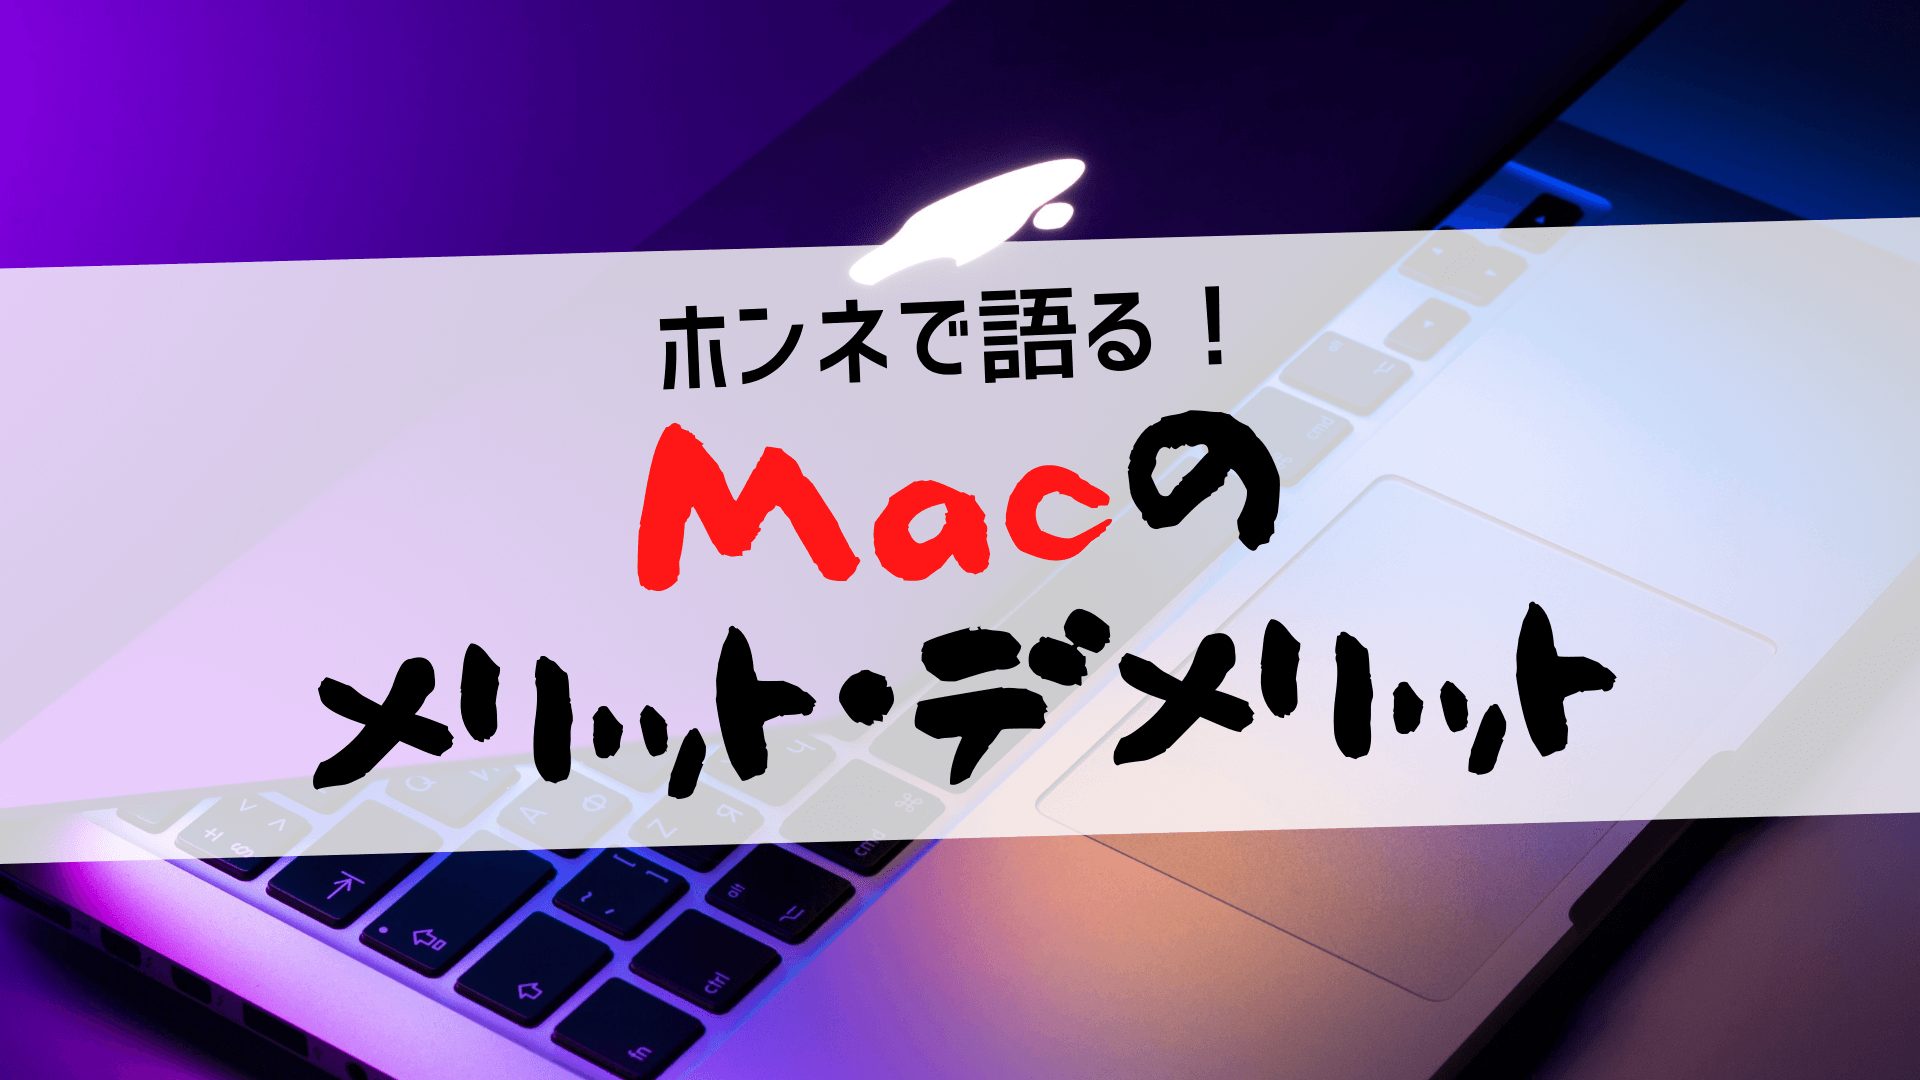  Macの メリット・デメリット